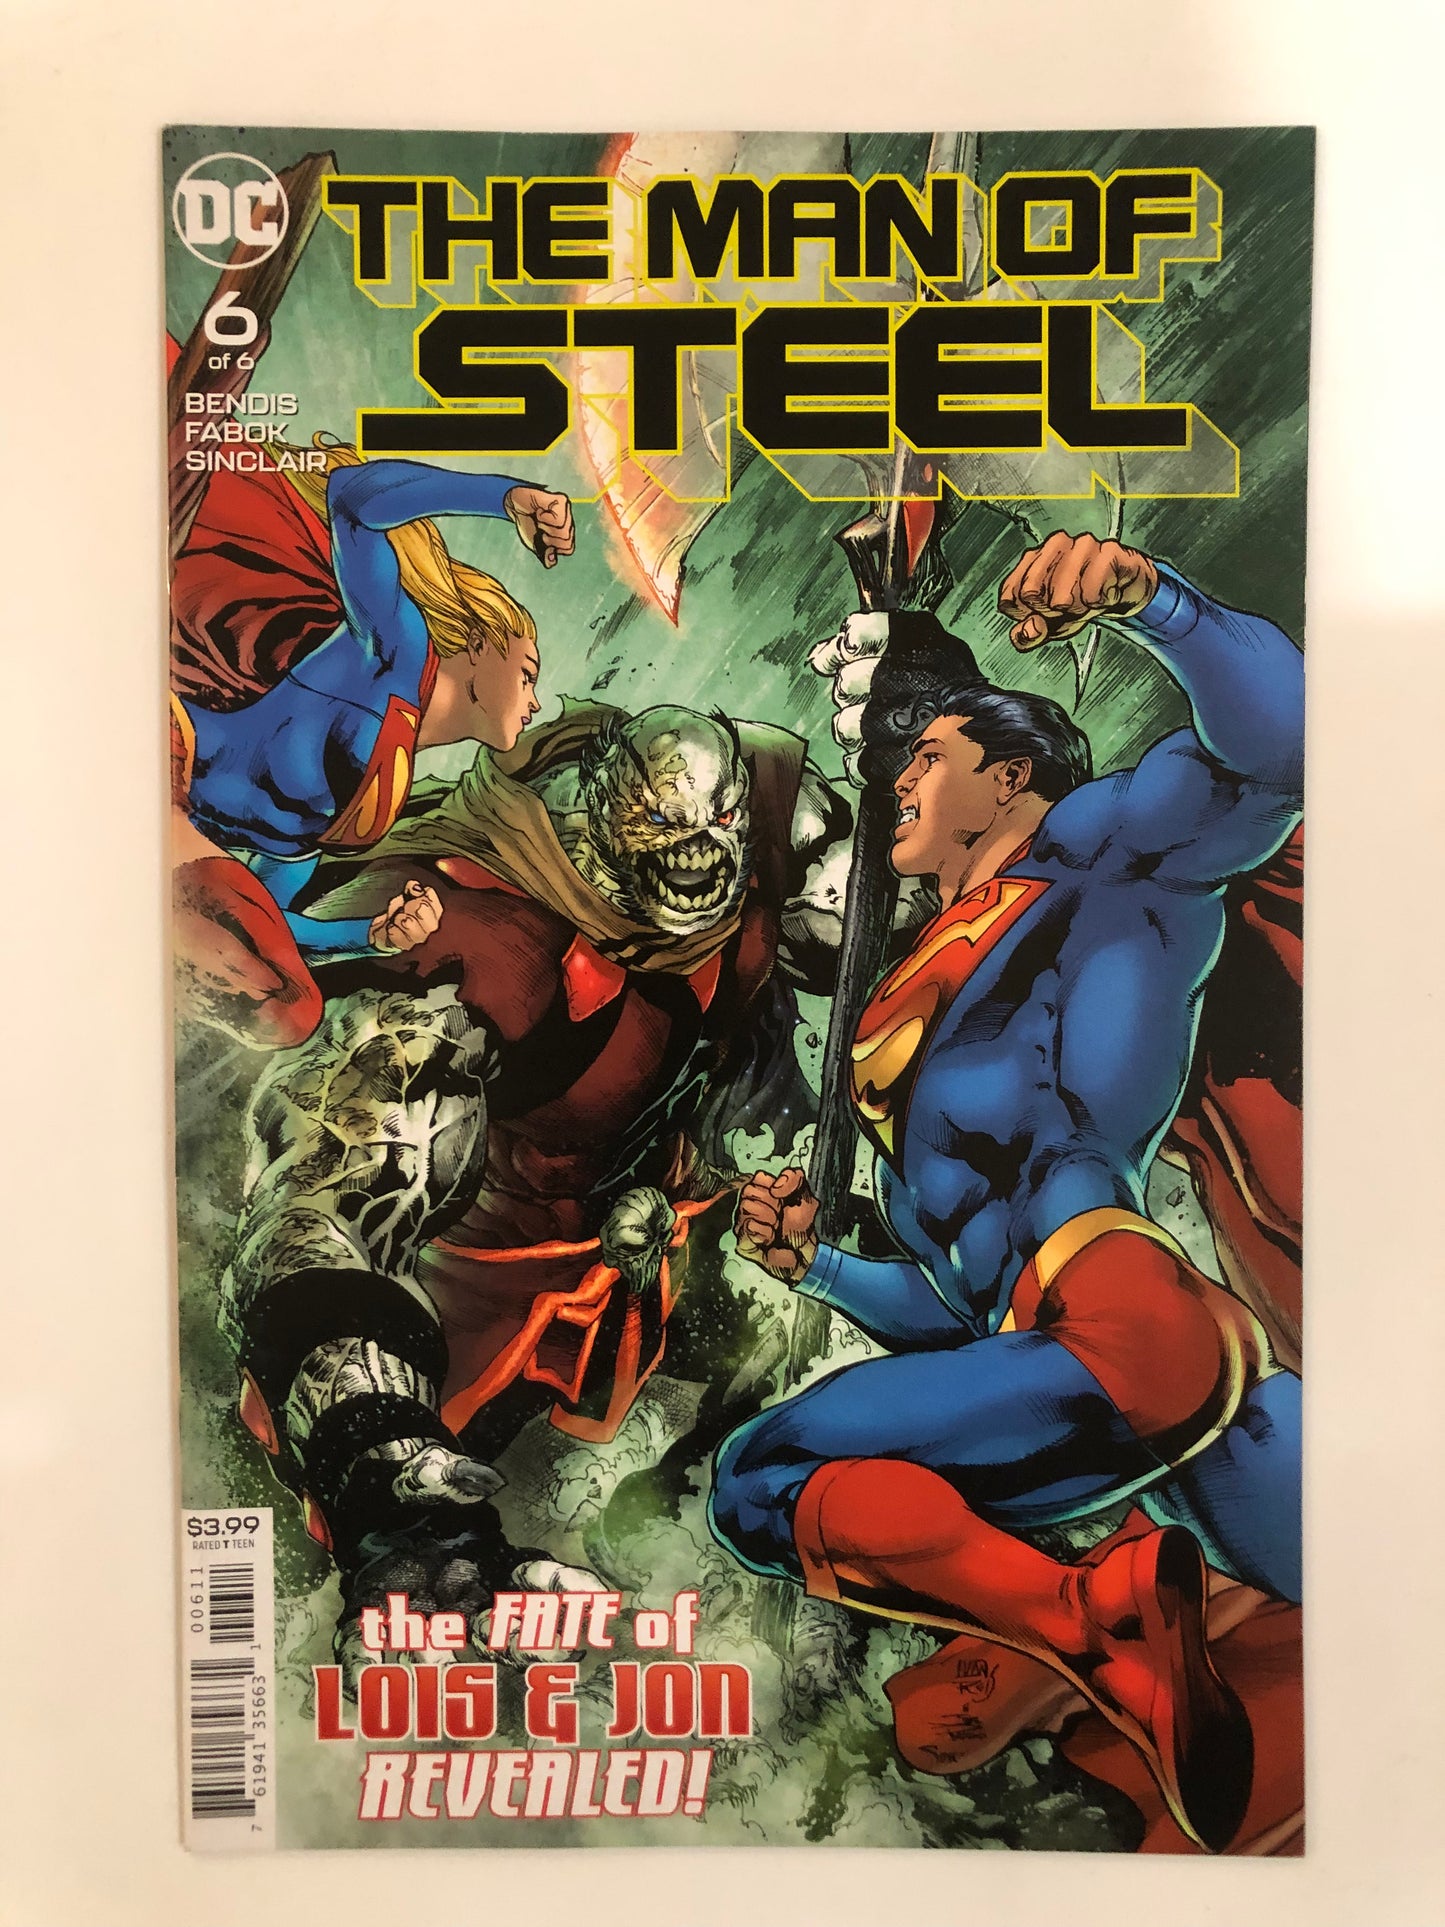 The Man of Steel #1-6 full set